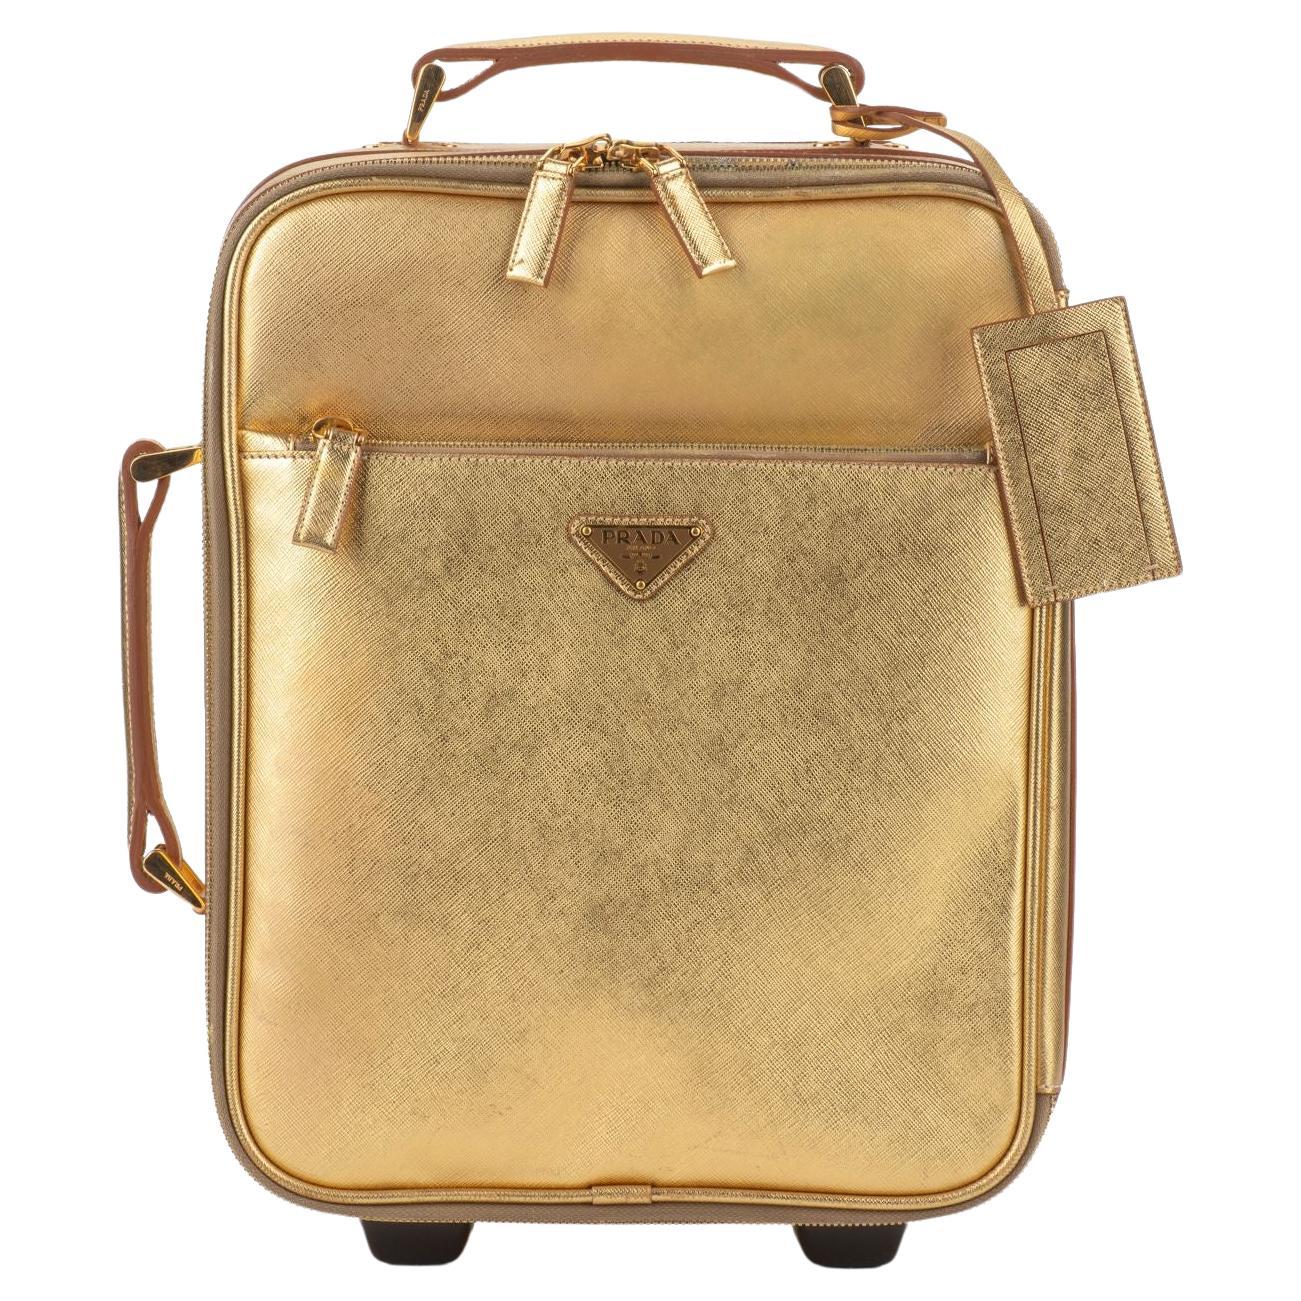 Prada Gold Saffiano Small Carry On Bag en vente